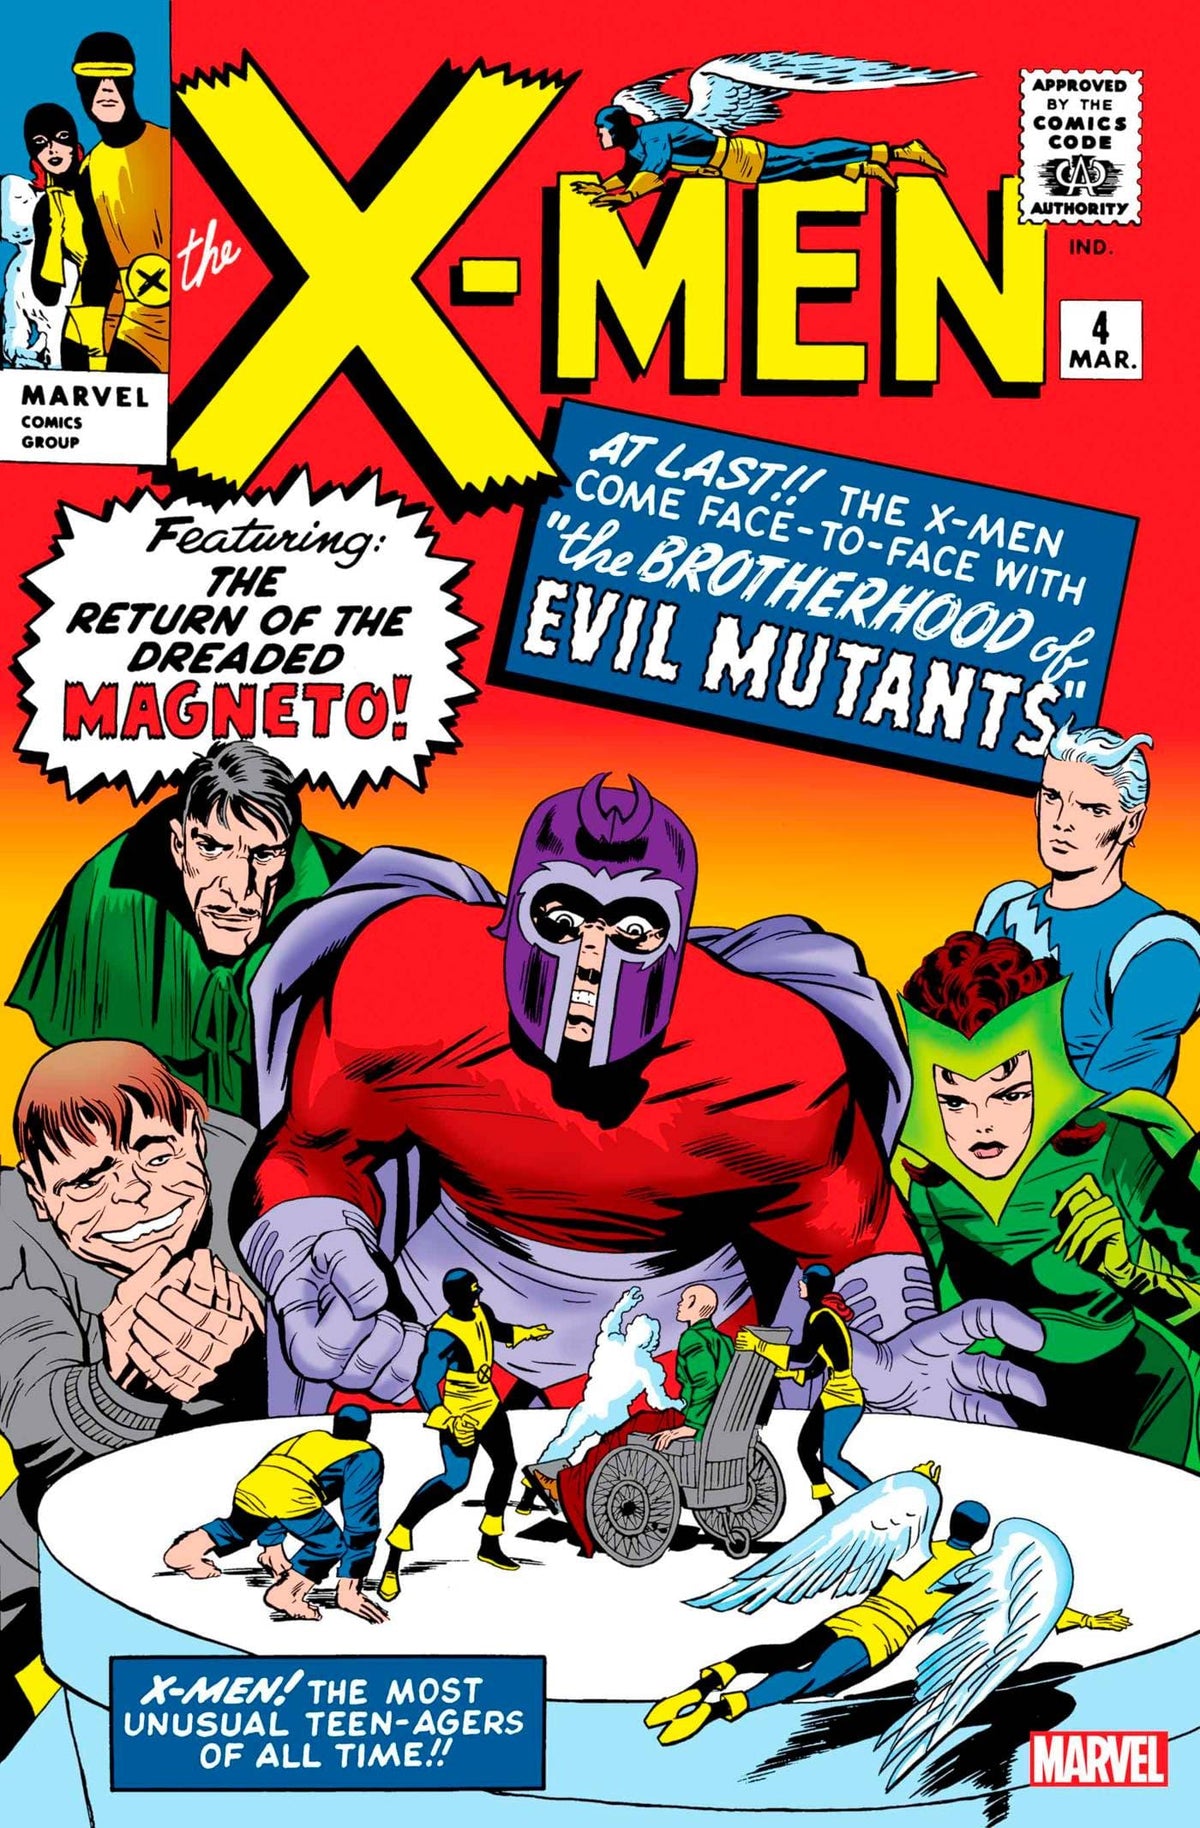 X-MEN #4 FACSIMILE EDITION NEW PTG PICTURE